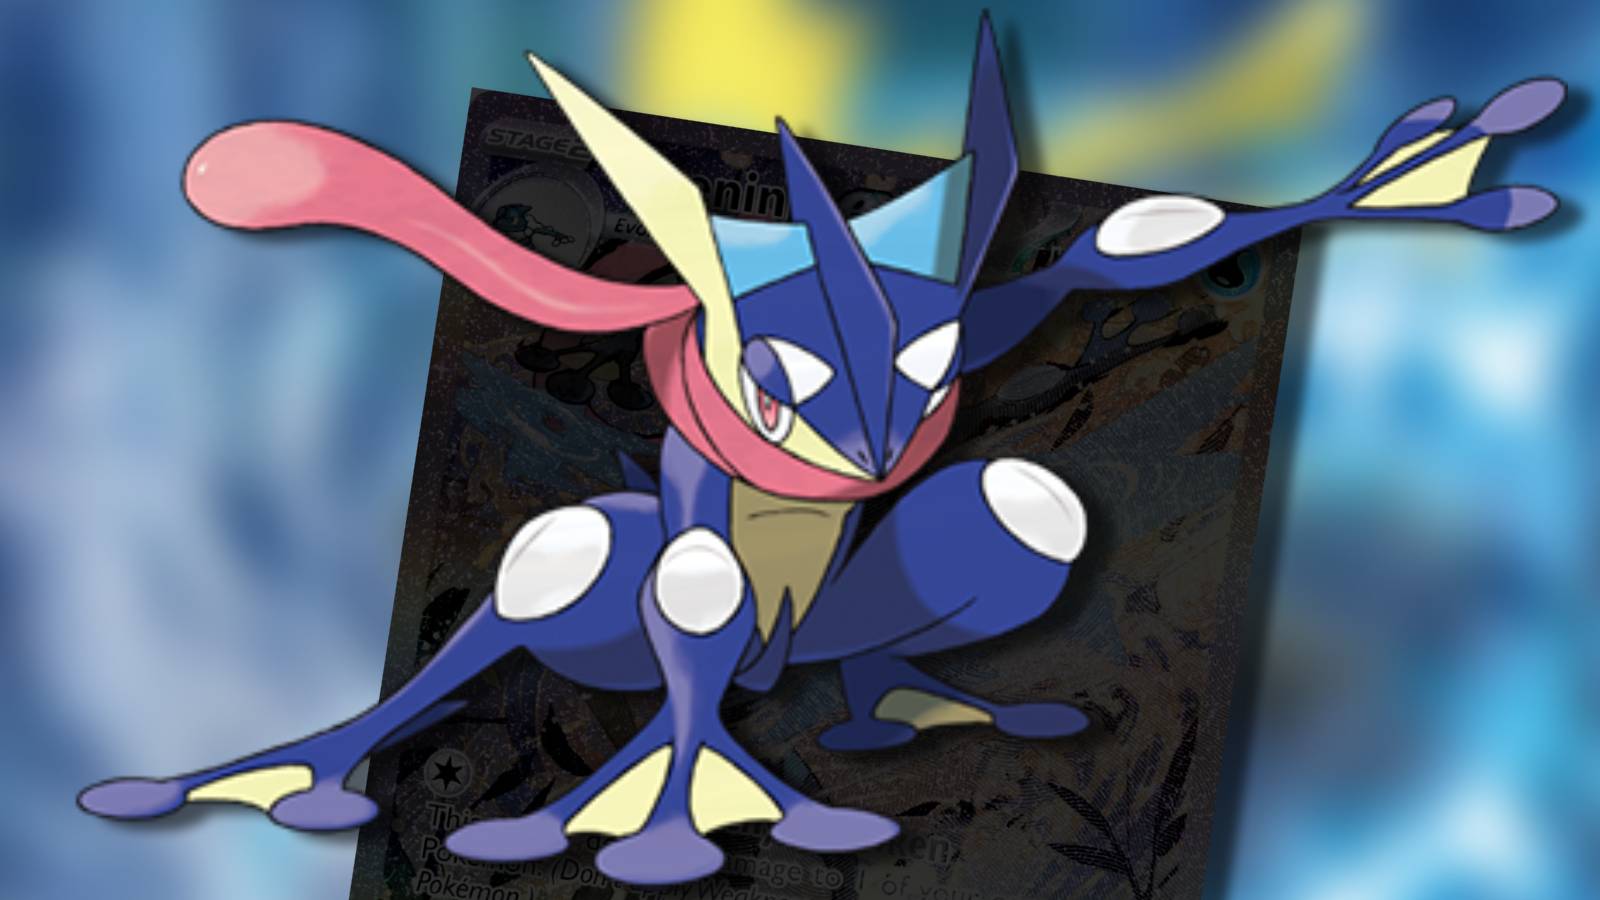 The Pokemon Greninja appears in front of an image of a POkemon card, hidden in shadow